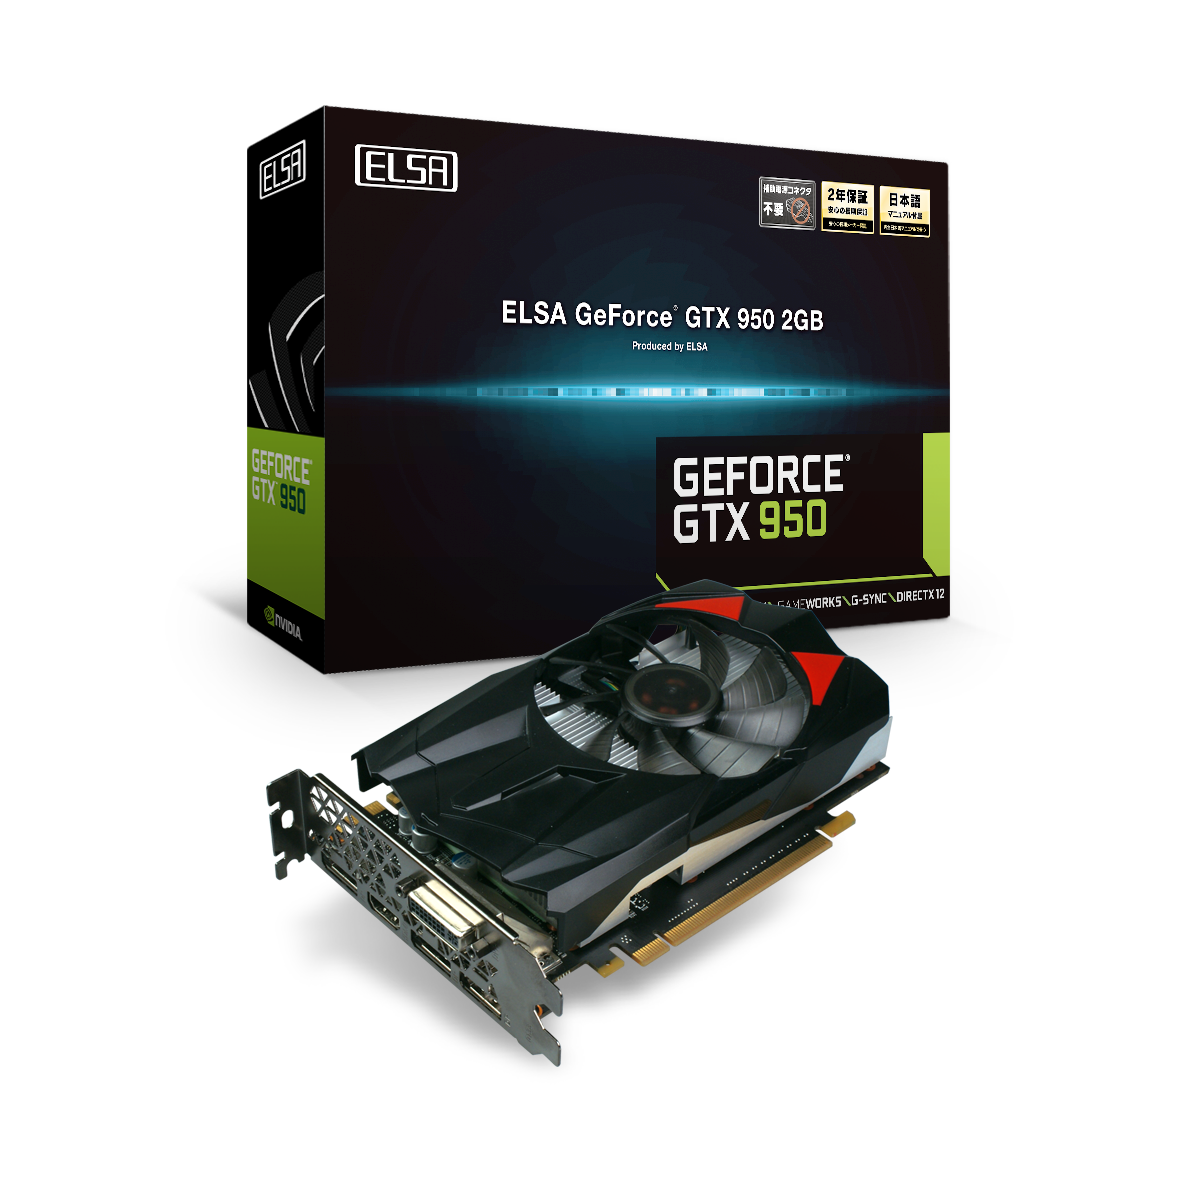 NVIDIA GeForce GTX 950 2GB